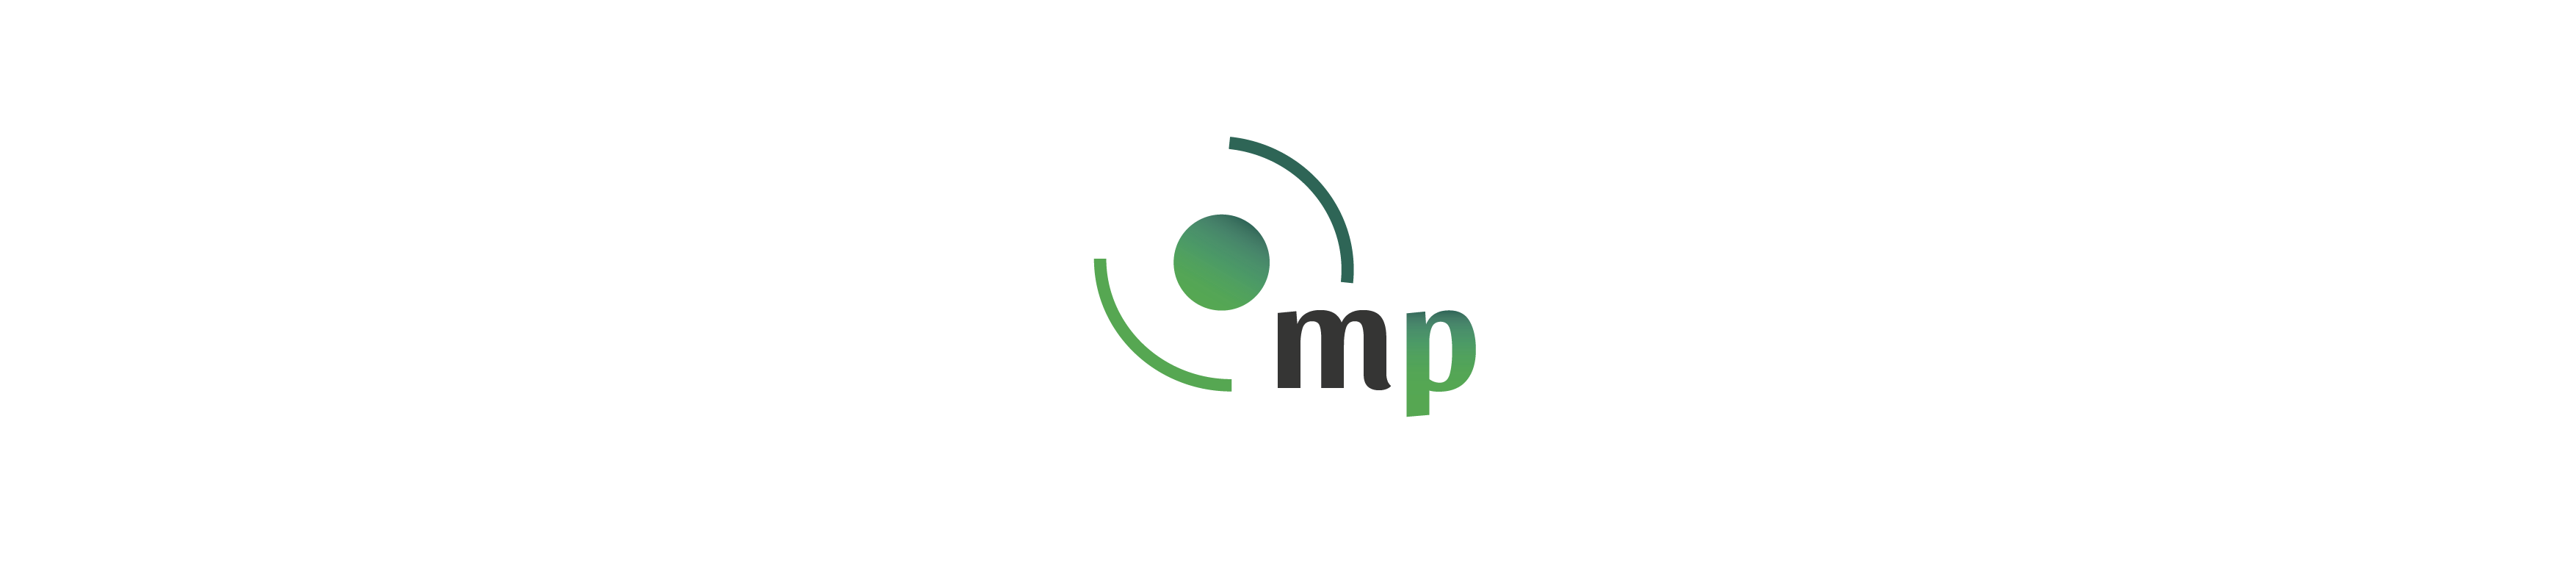 Logo Melpopharma_Logo melpopharma versión reducida.png